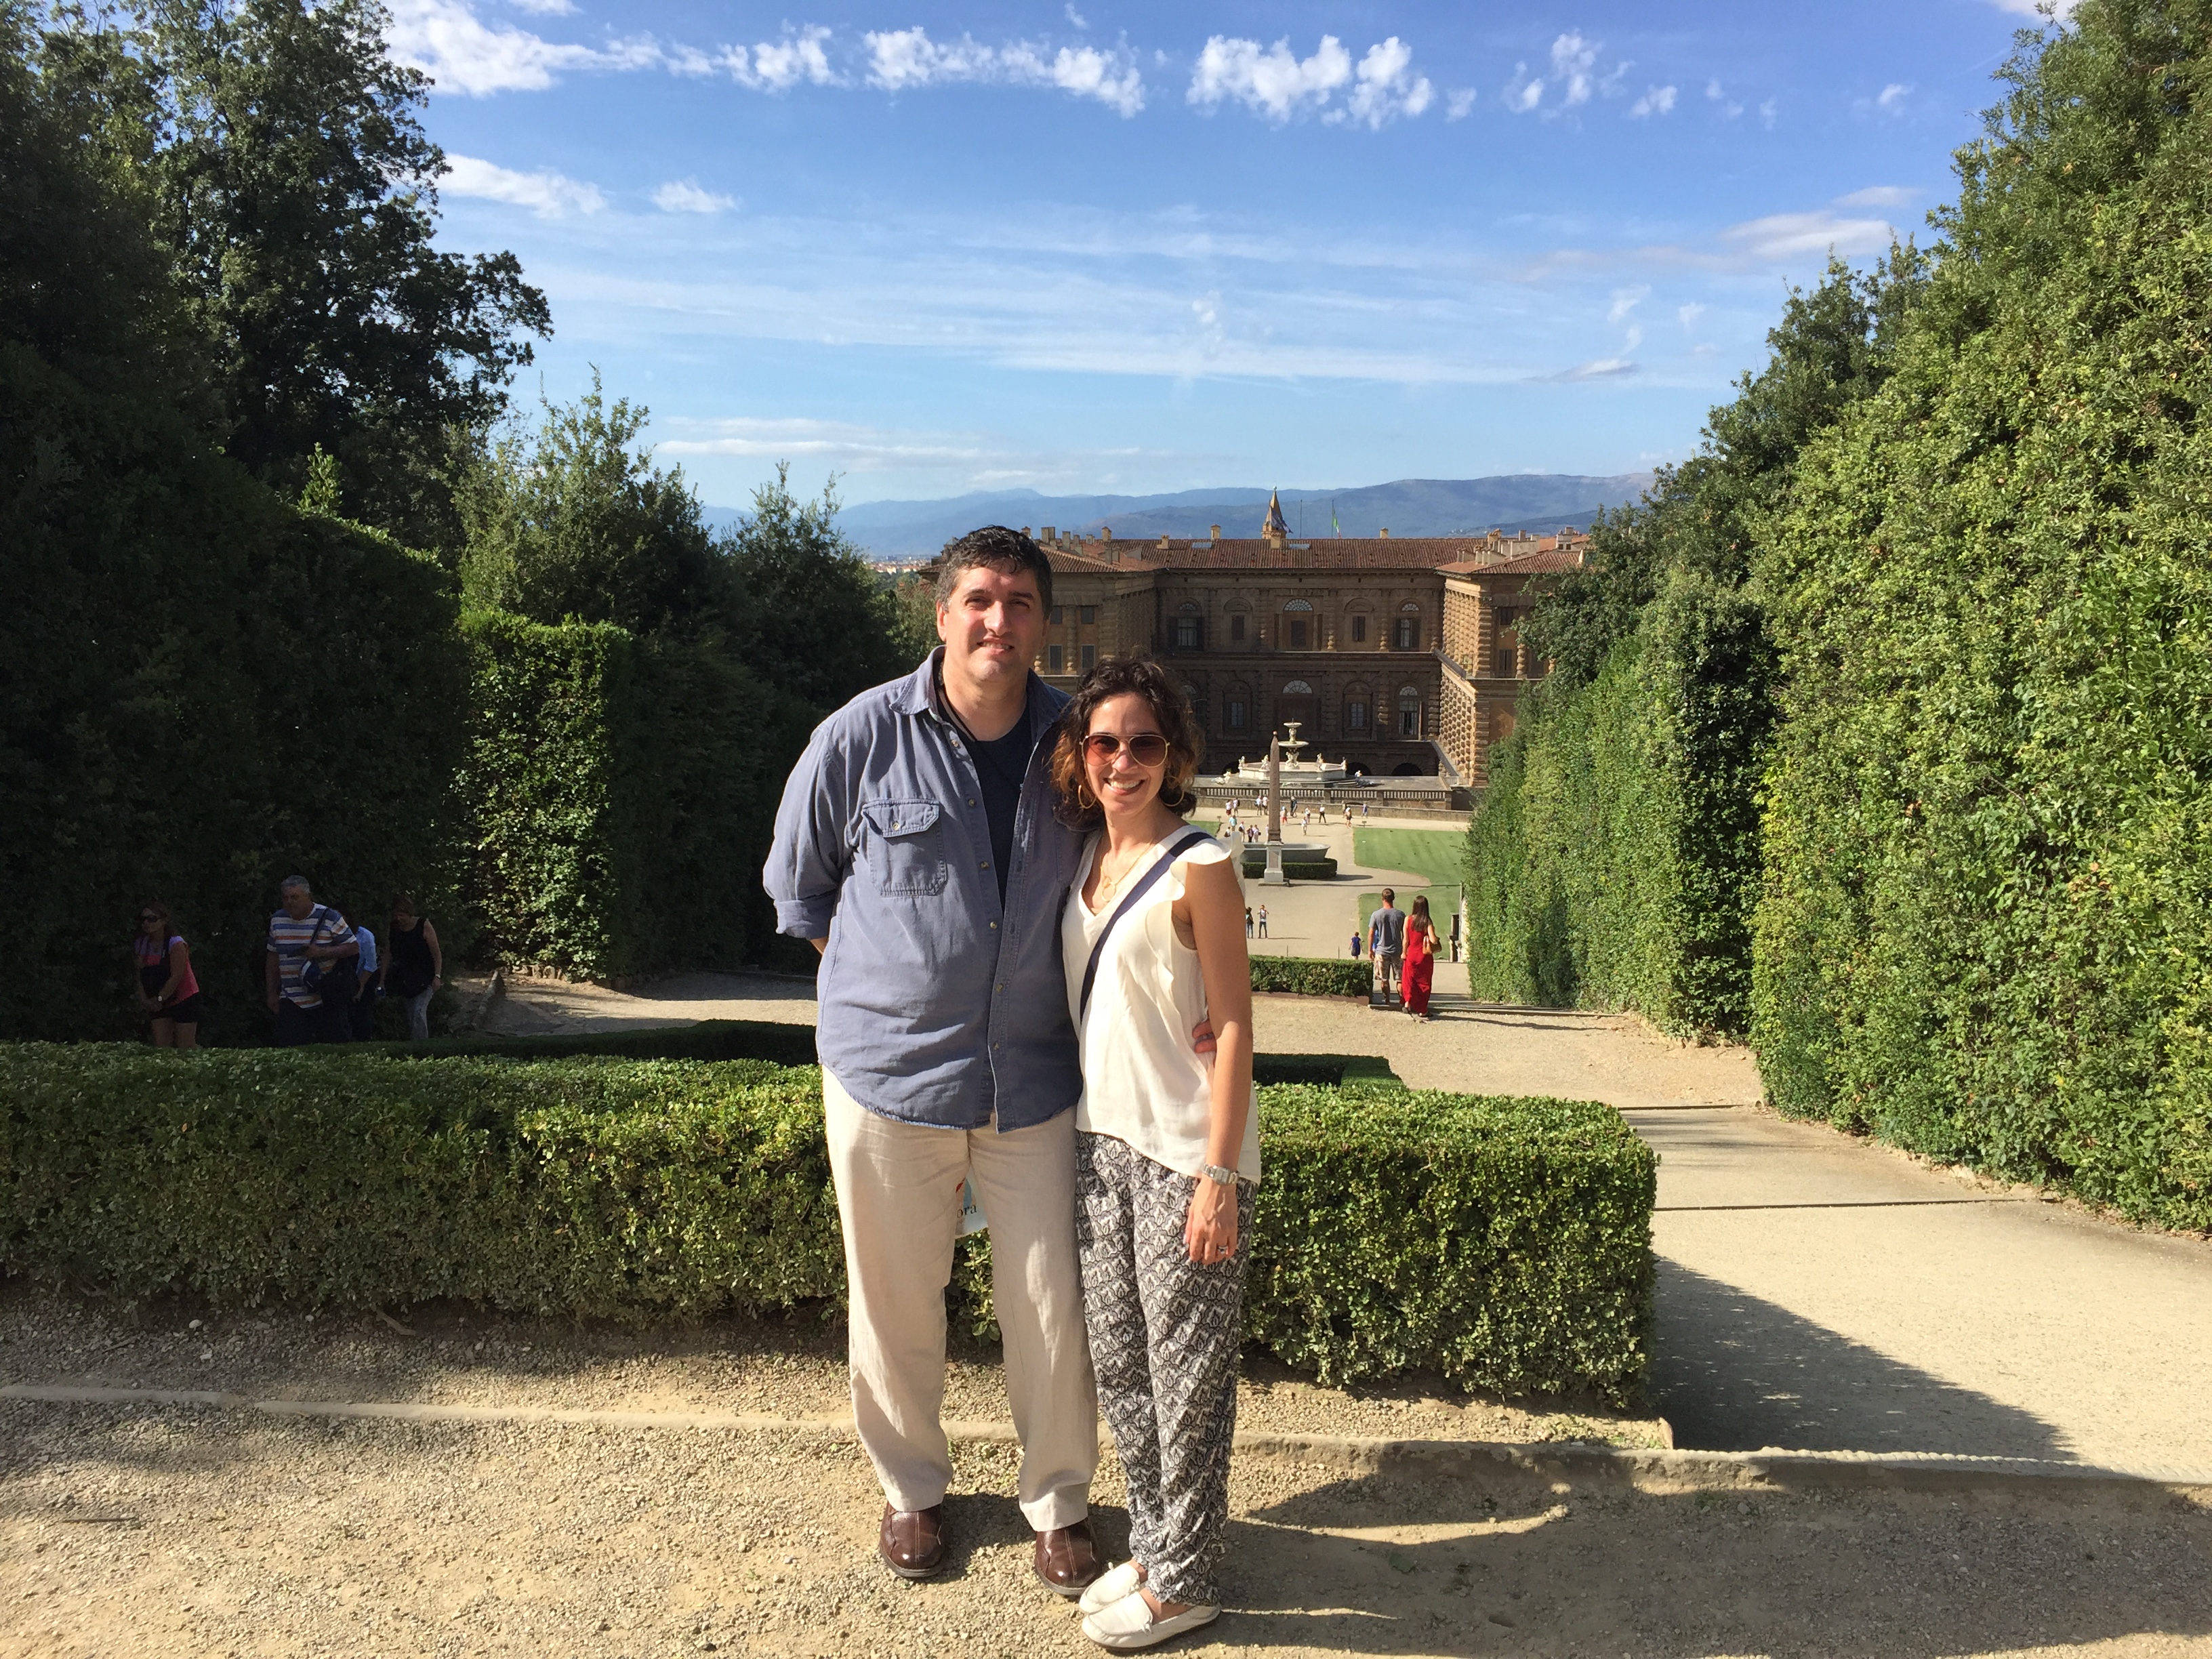 Boboli Gardens with the Palazzo Pitti in the background